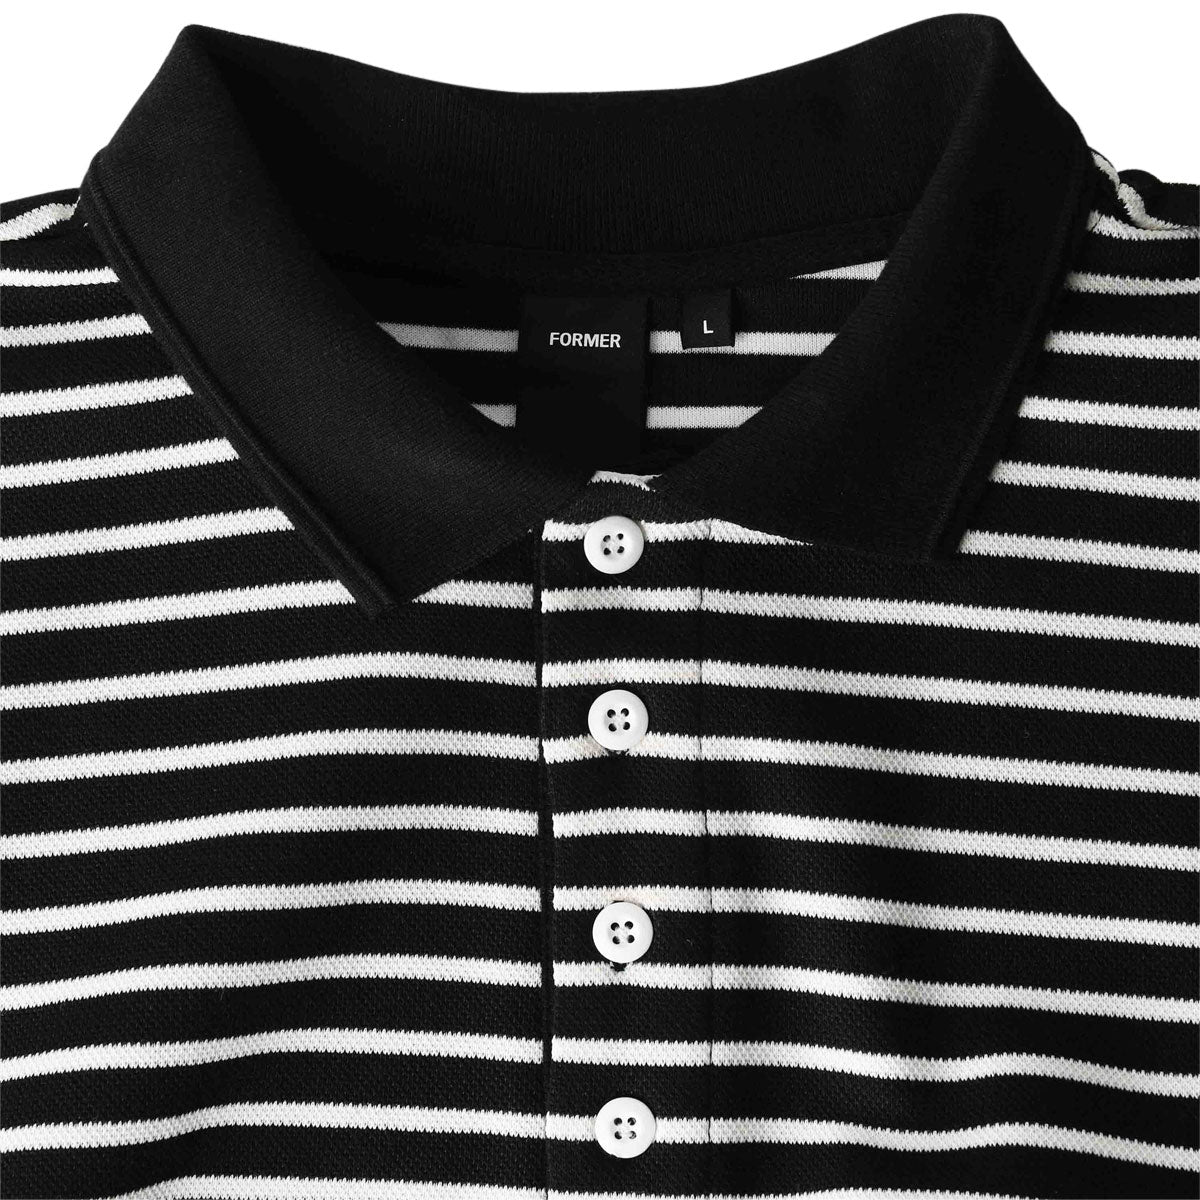 Former Uniform Striped Polo Shirt - Worn Black/White image 5